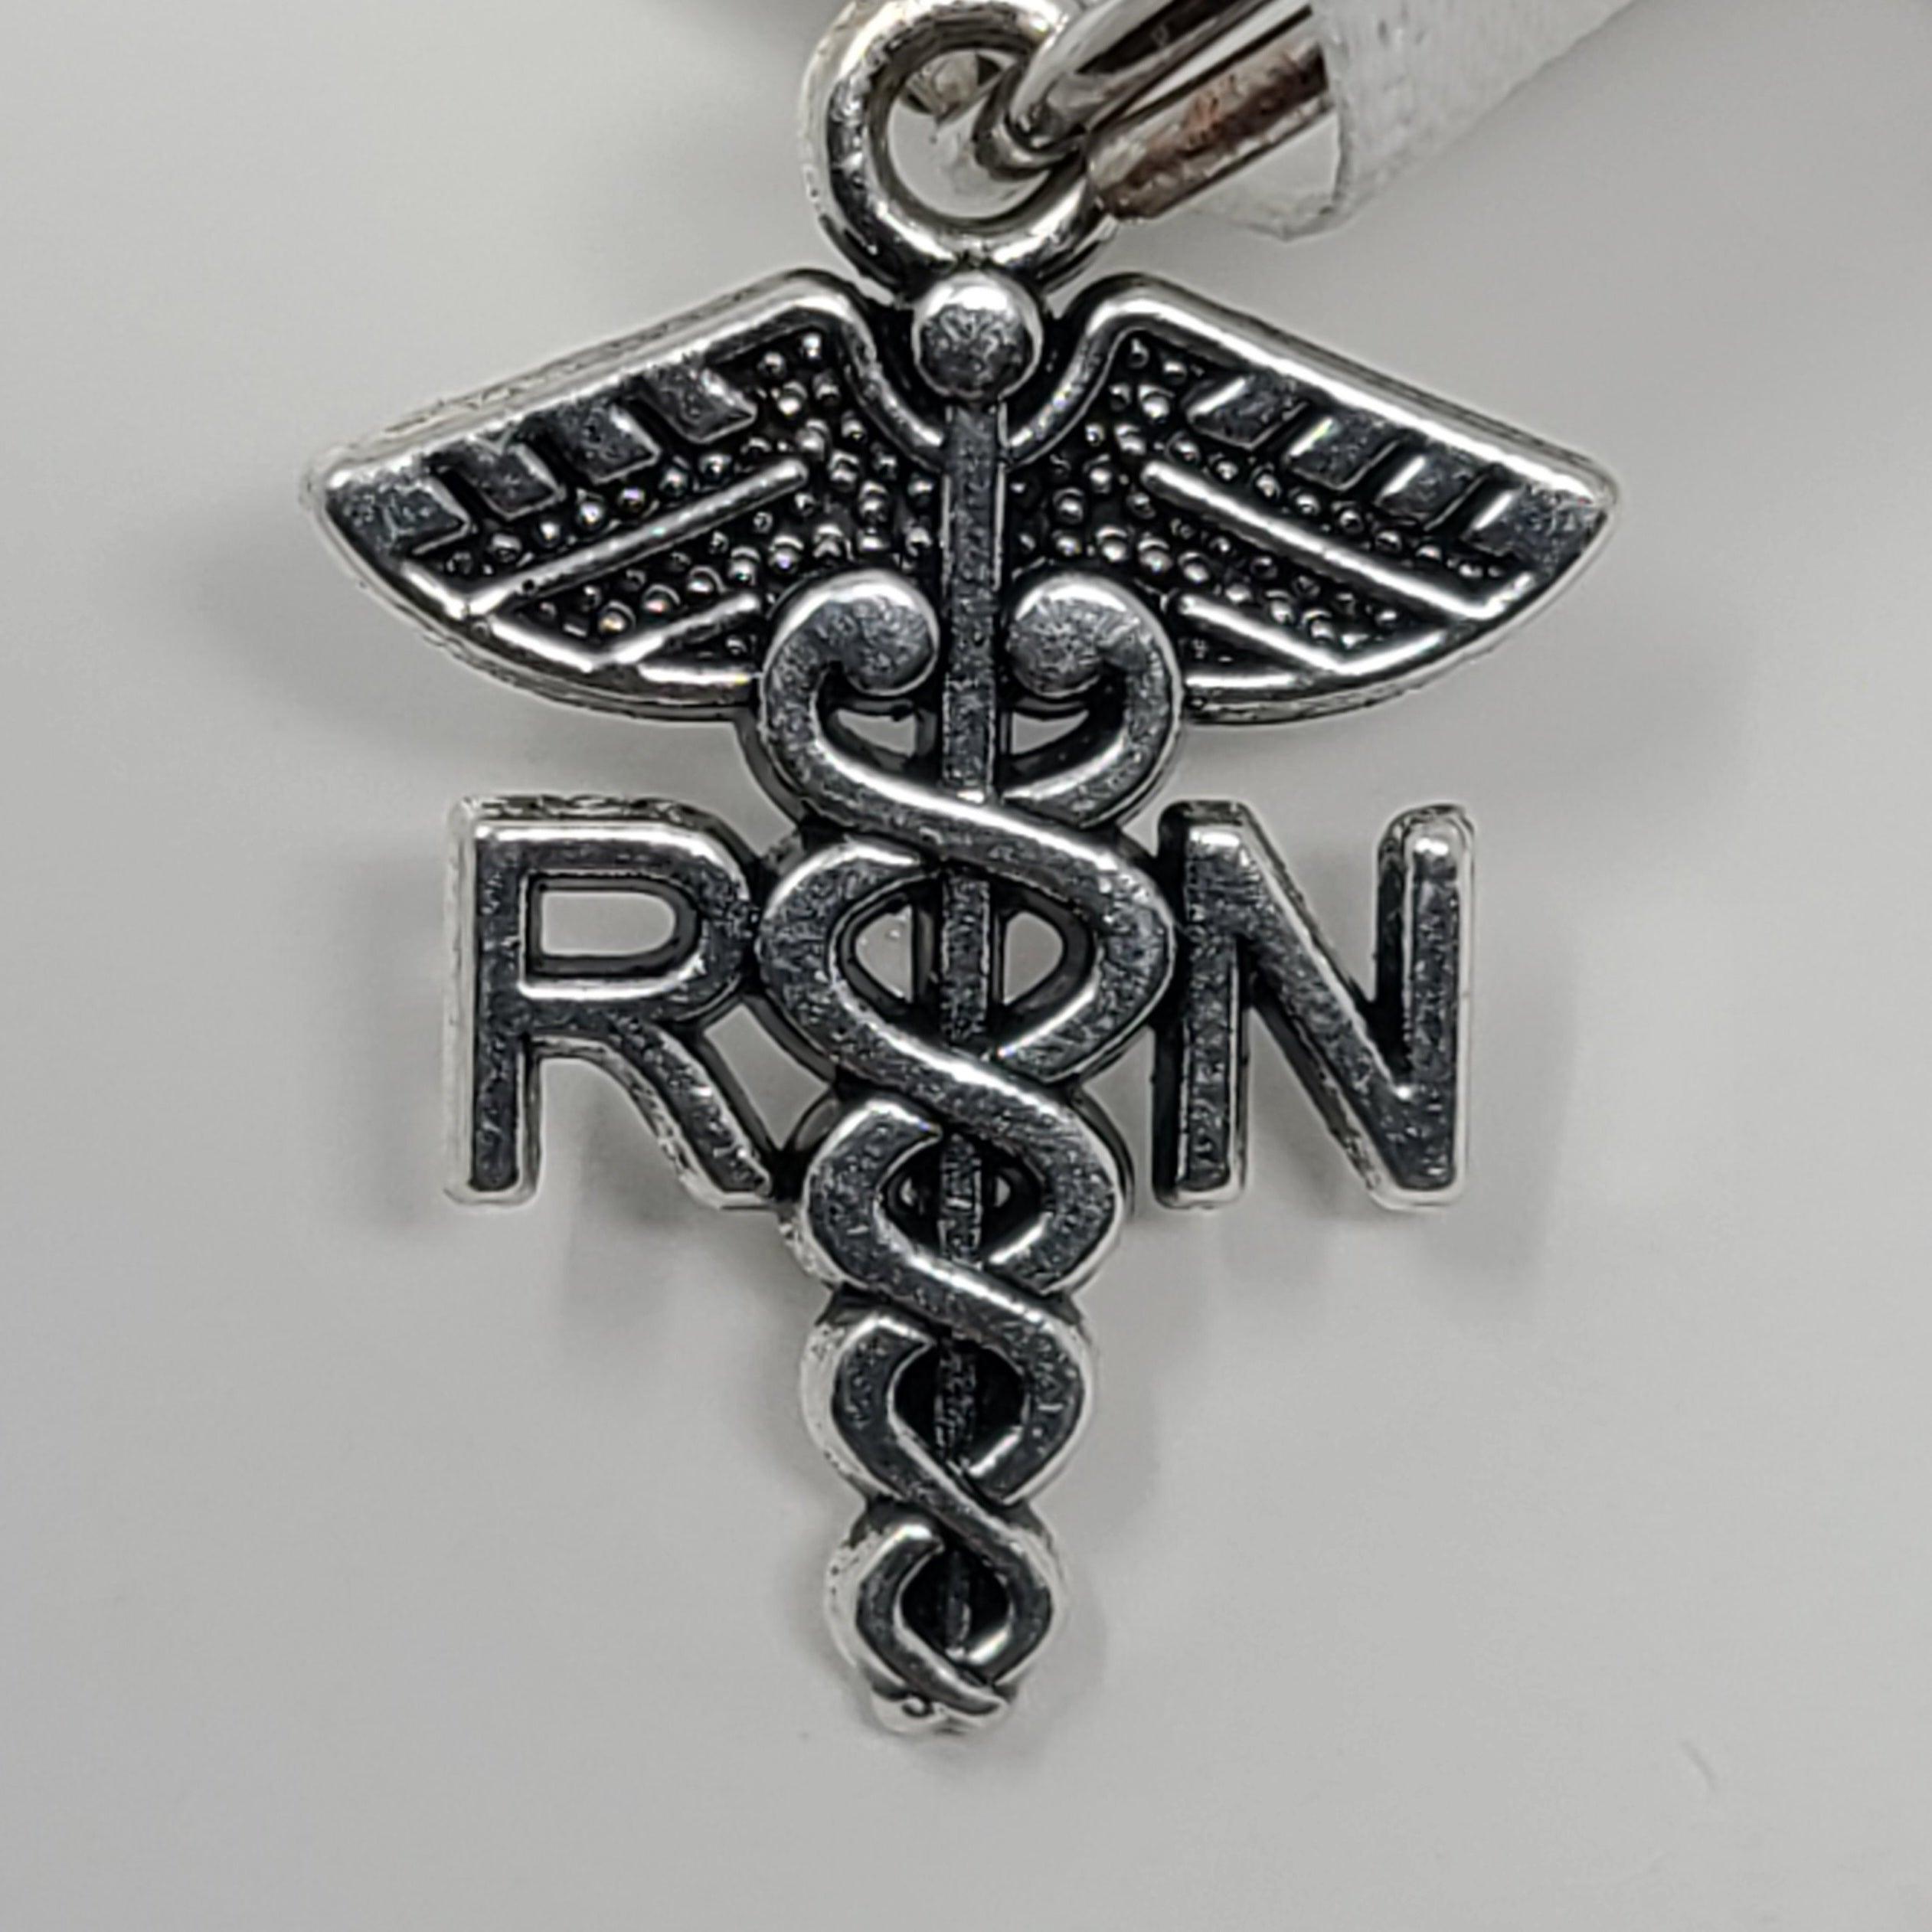 Personalized Nurse ornament, RN ornament, gift for RN, BSN Ornament, Scrub top ornaments